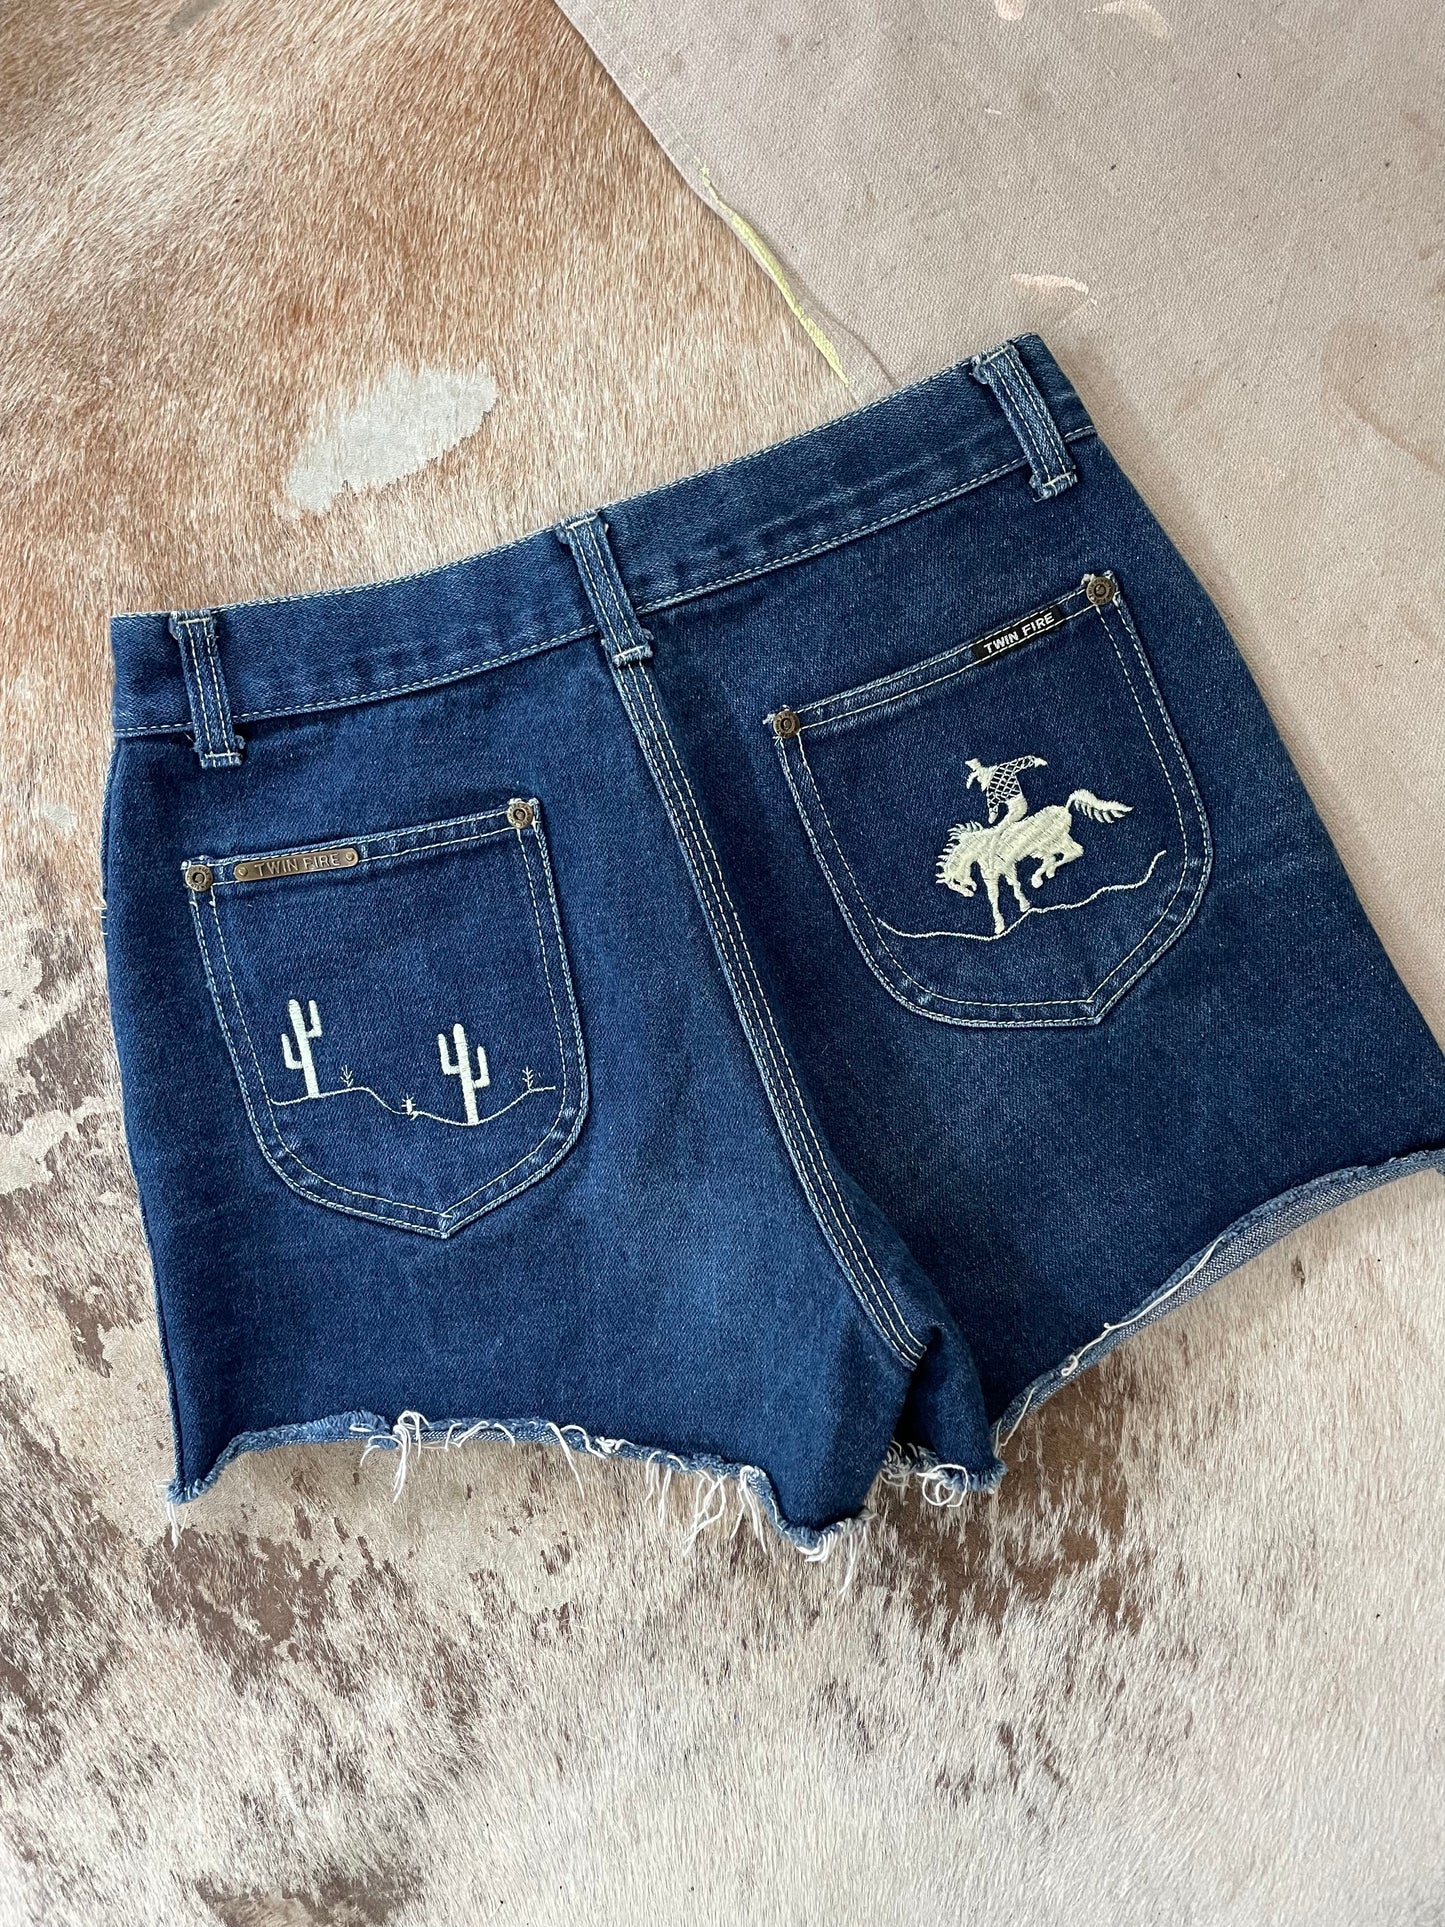 70s Western Theme Cut-off Jean Shorts